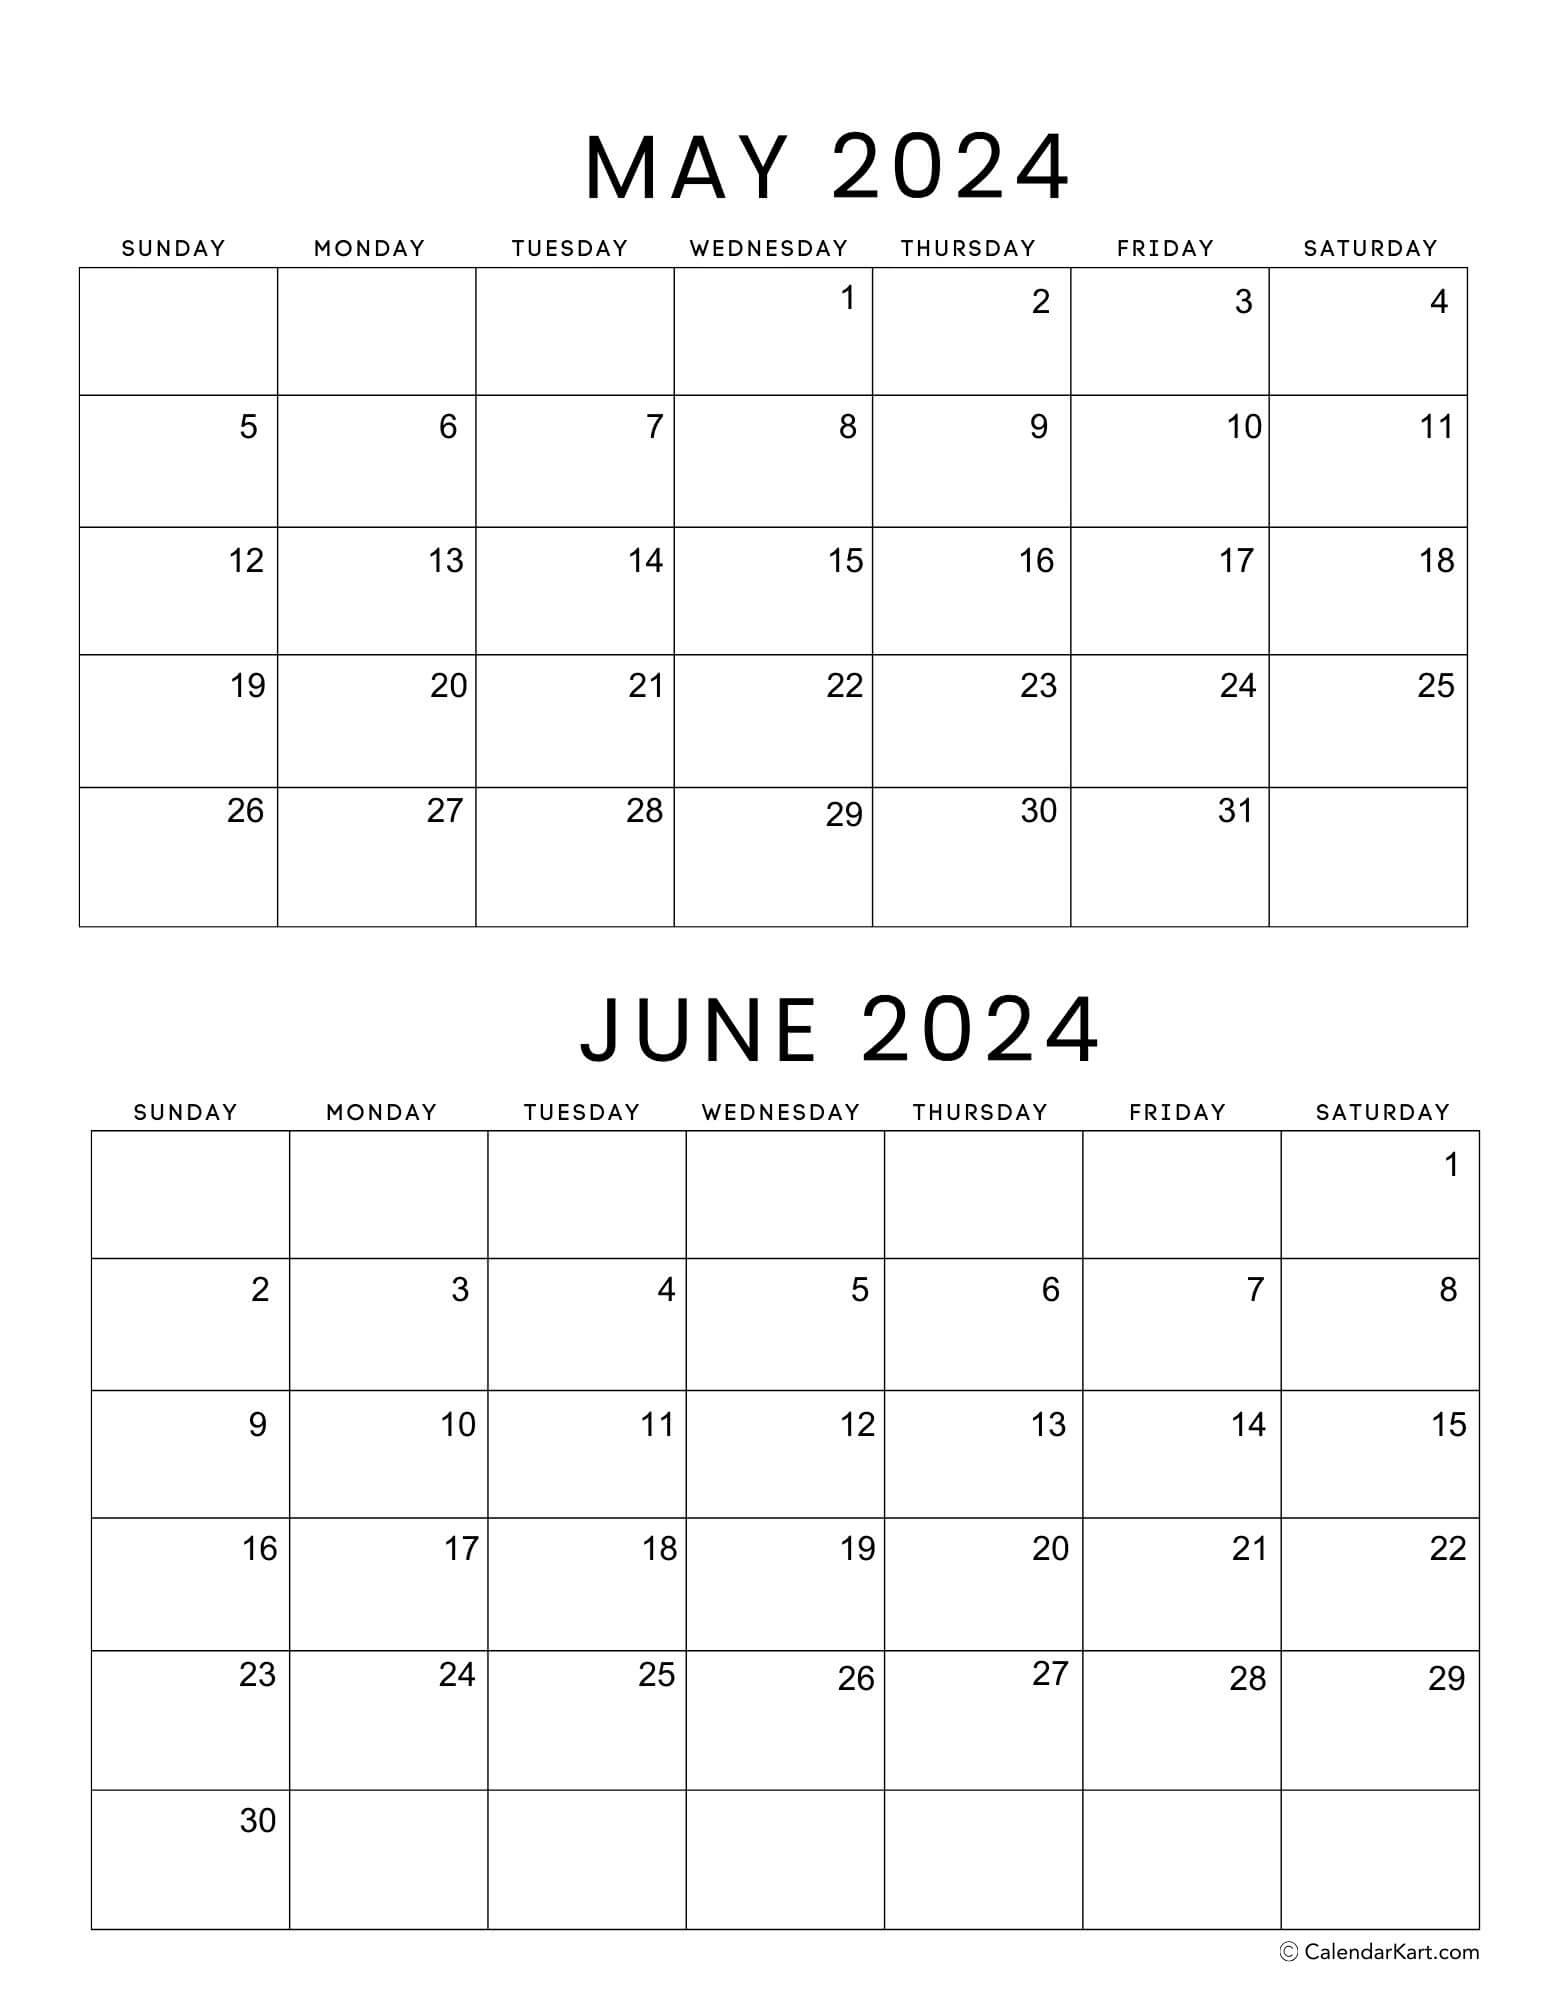 May June 2024 Calendars (3Rd Bi-Monthly) - Calendarkart pertaining to May June 2024 Calendar With Holidays